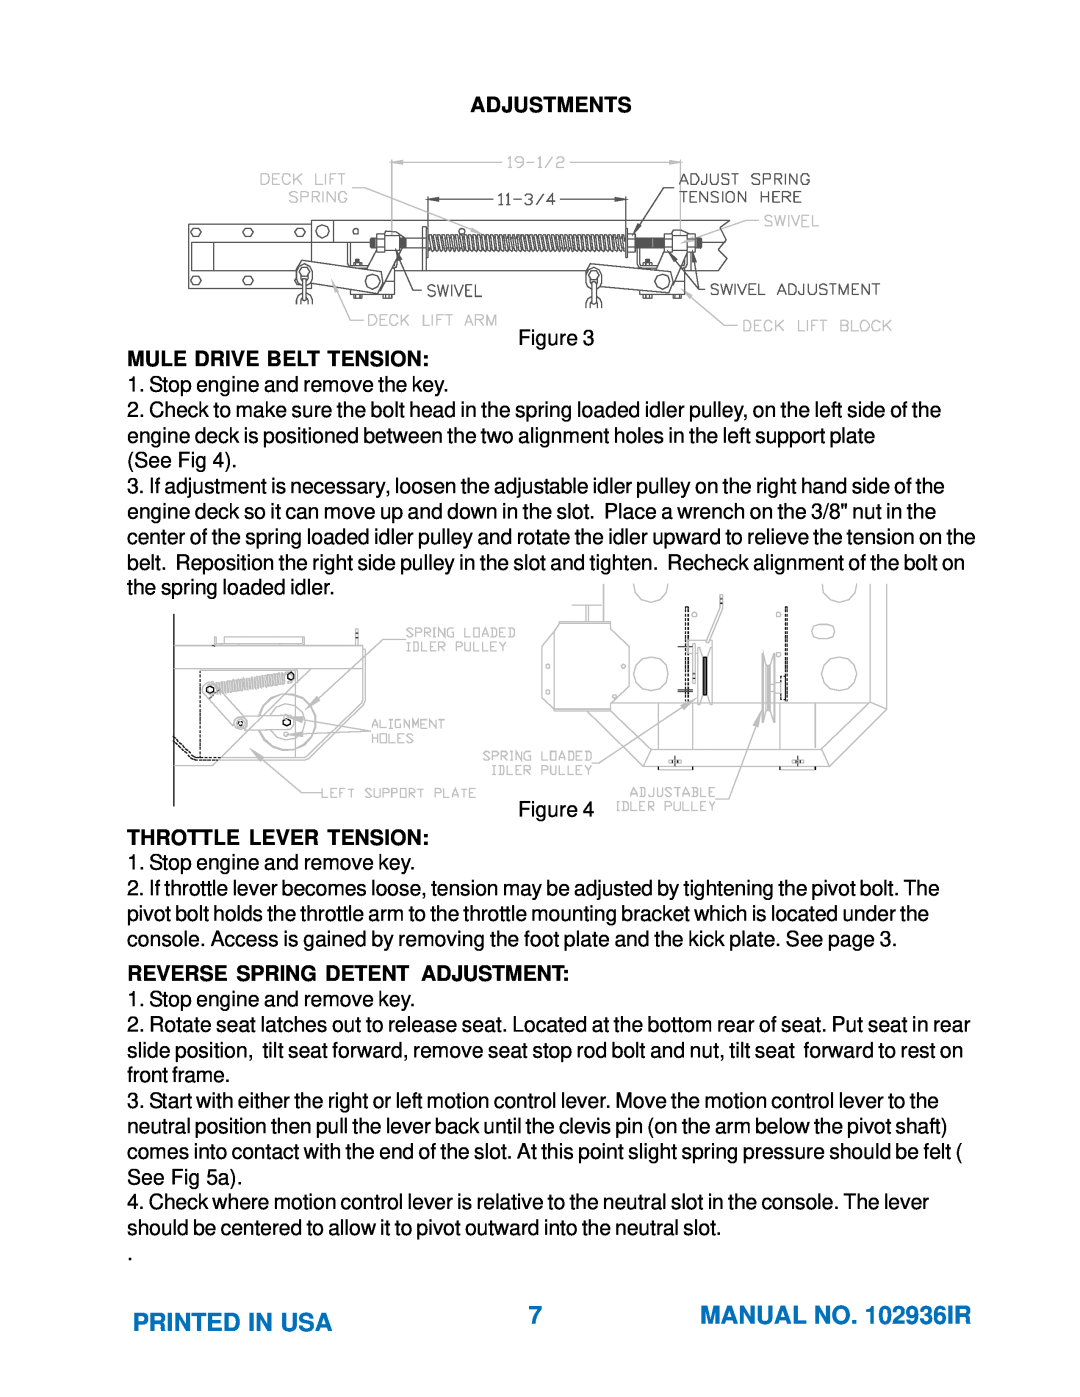 Yazoo/Kees ZKH52251 manual Adjustments, Mule Drive Belt Tension, Throttle Lever Tension, Reverse Spring Detent Adjustment 